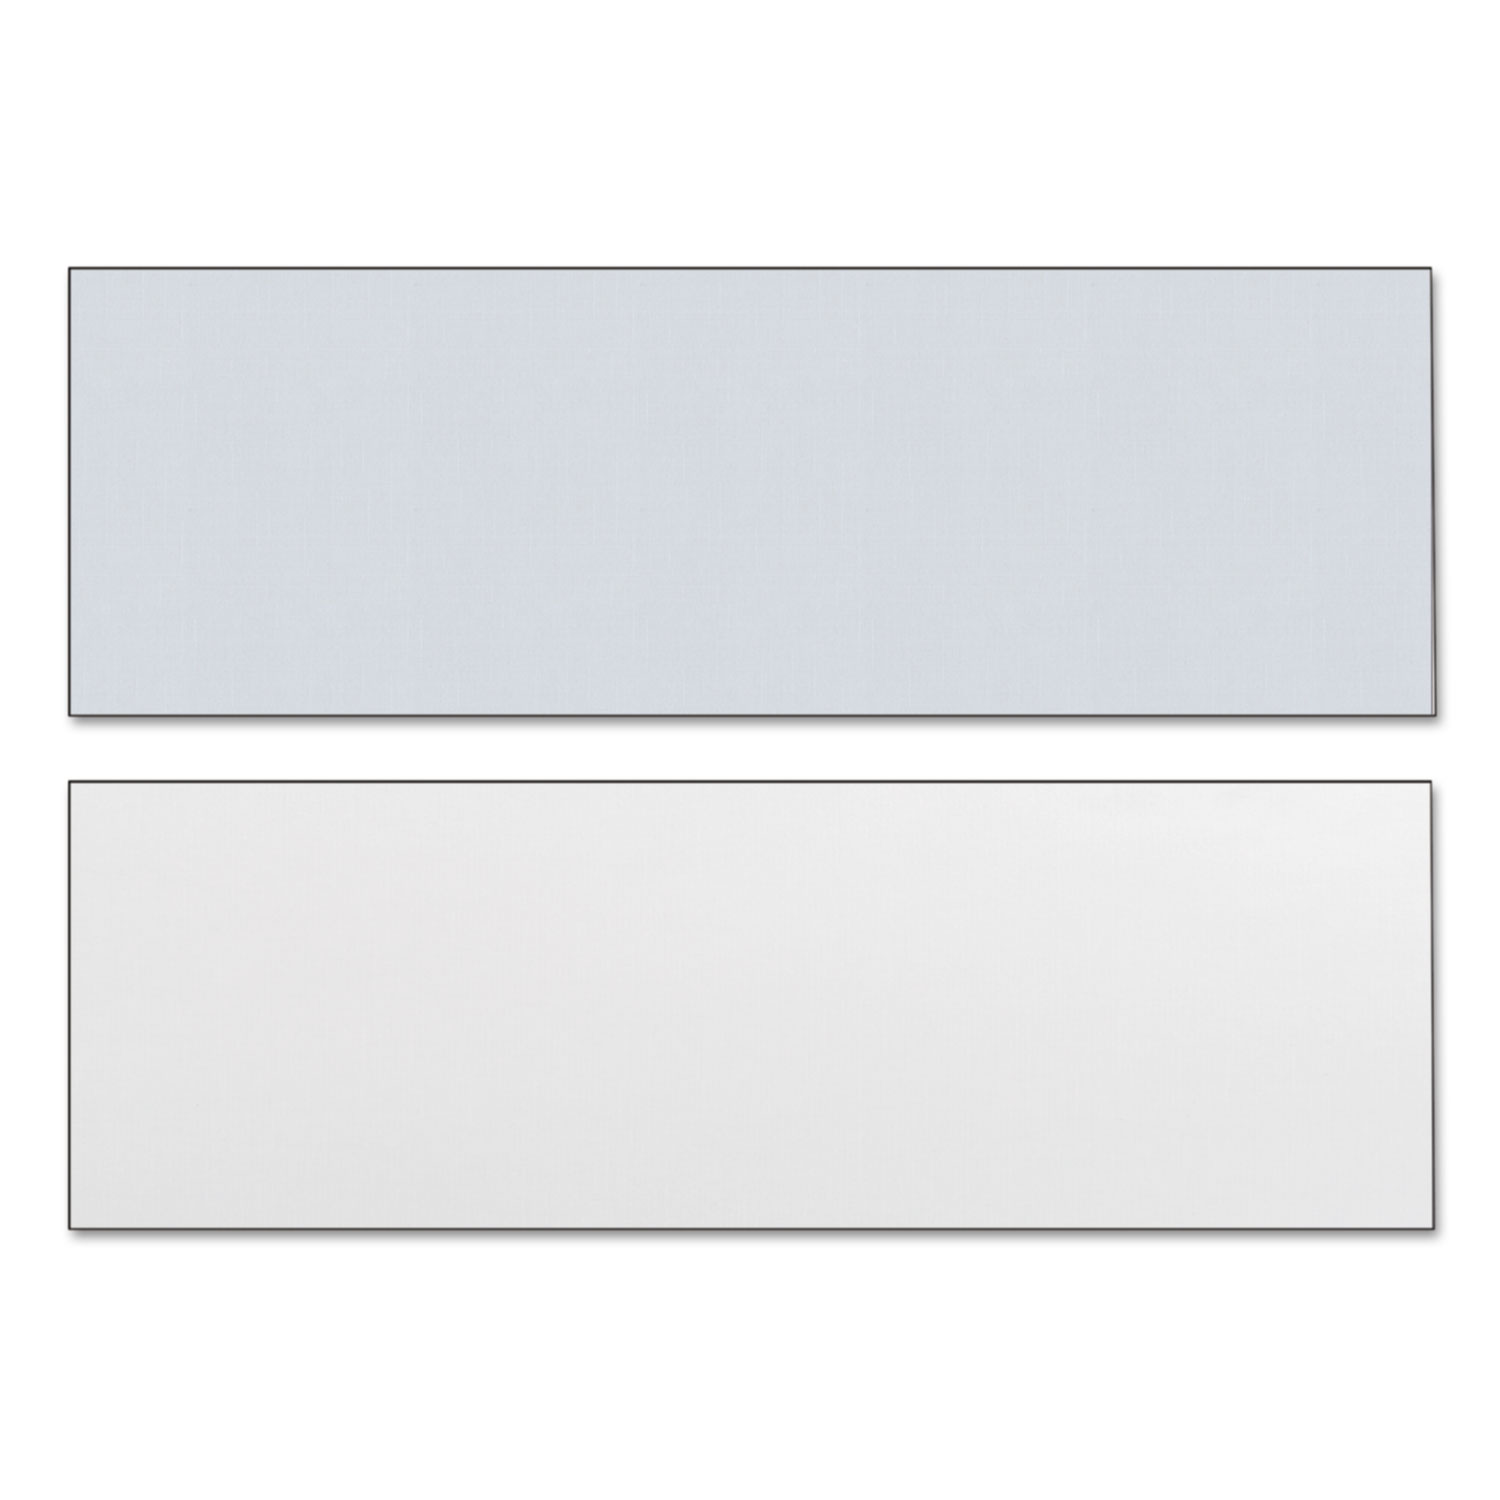 Reversible Laminate Table Top, Rectangular, 71 1/2w x 23 5/8d, White/Gray